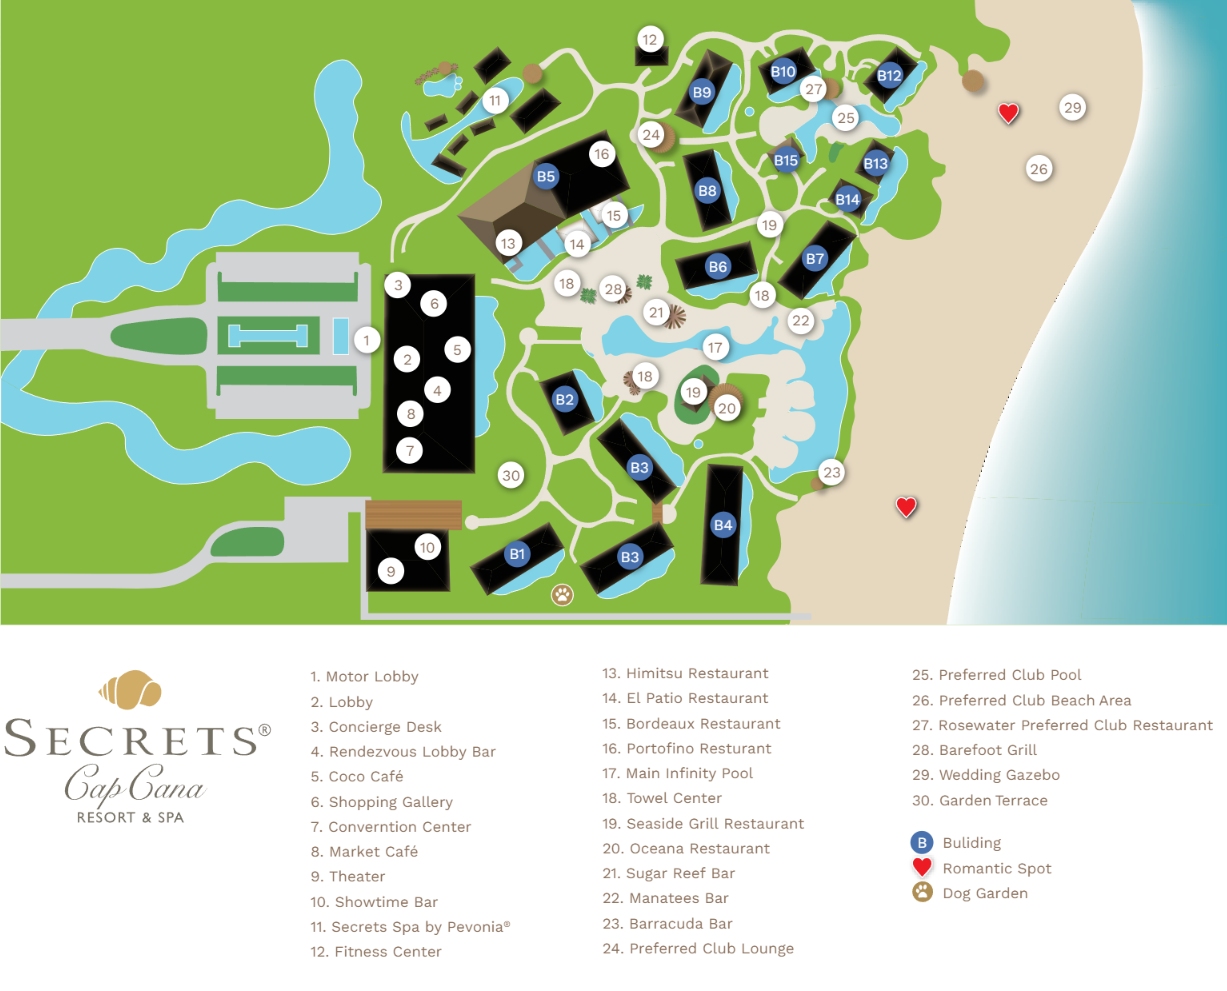 Hotel Secrets Cap Cana Resort & Spa - Cap Cana. Punta Cana